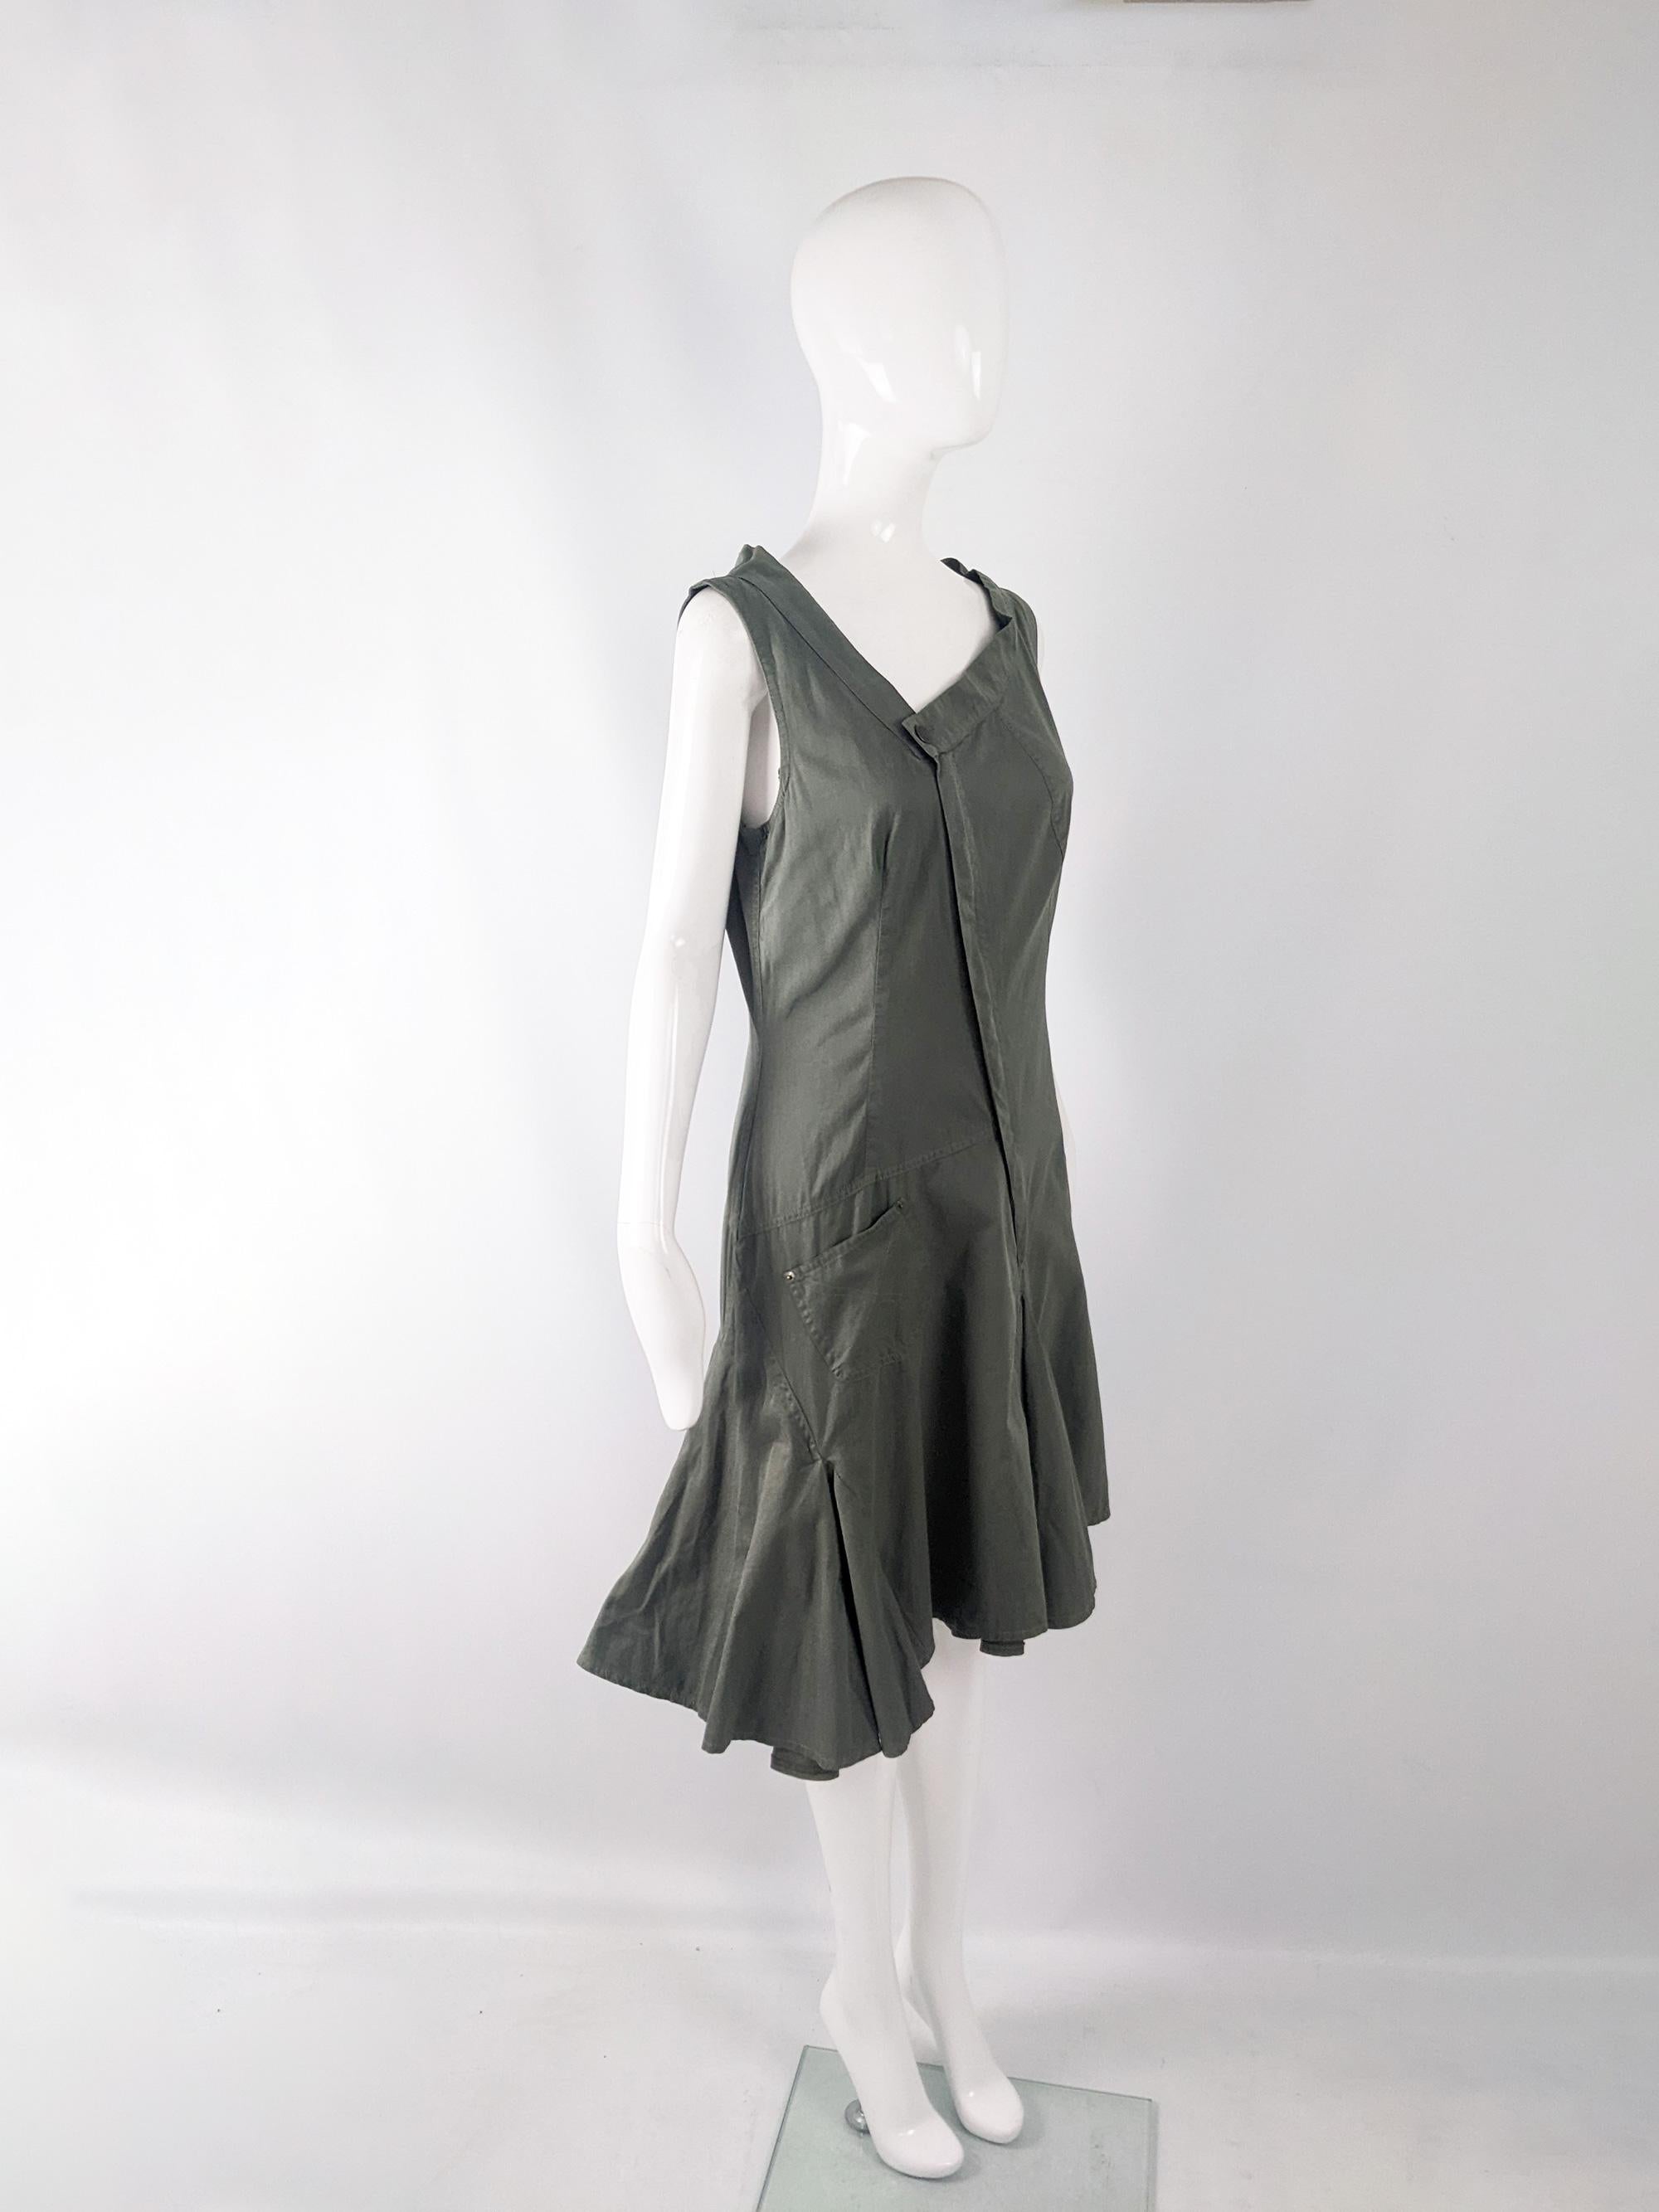 Plein Sud Jeans Vintage Khaki Green Asymmetric Avant Garde Dress, 1990s For Sale 2